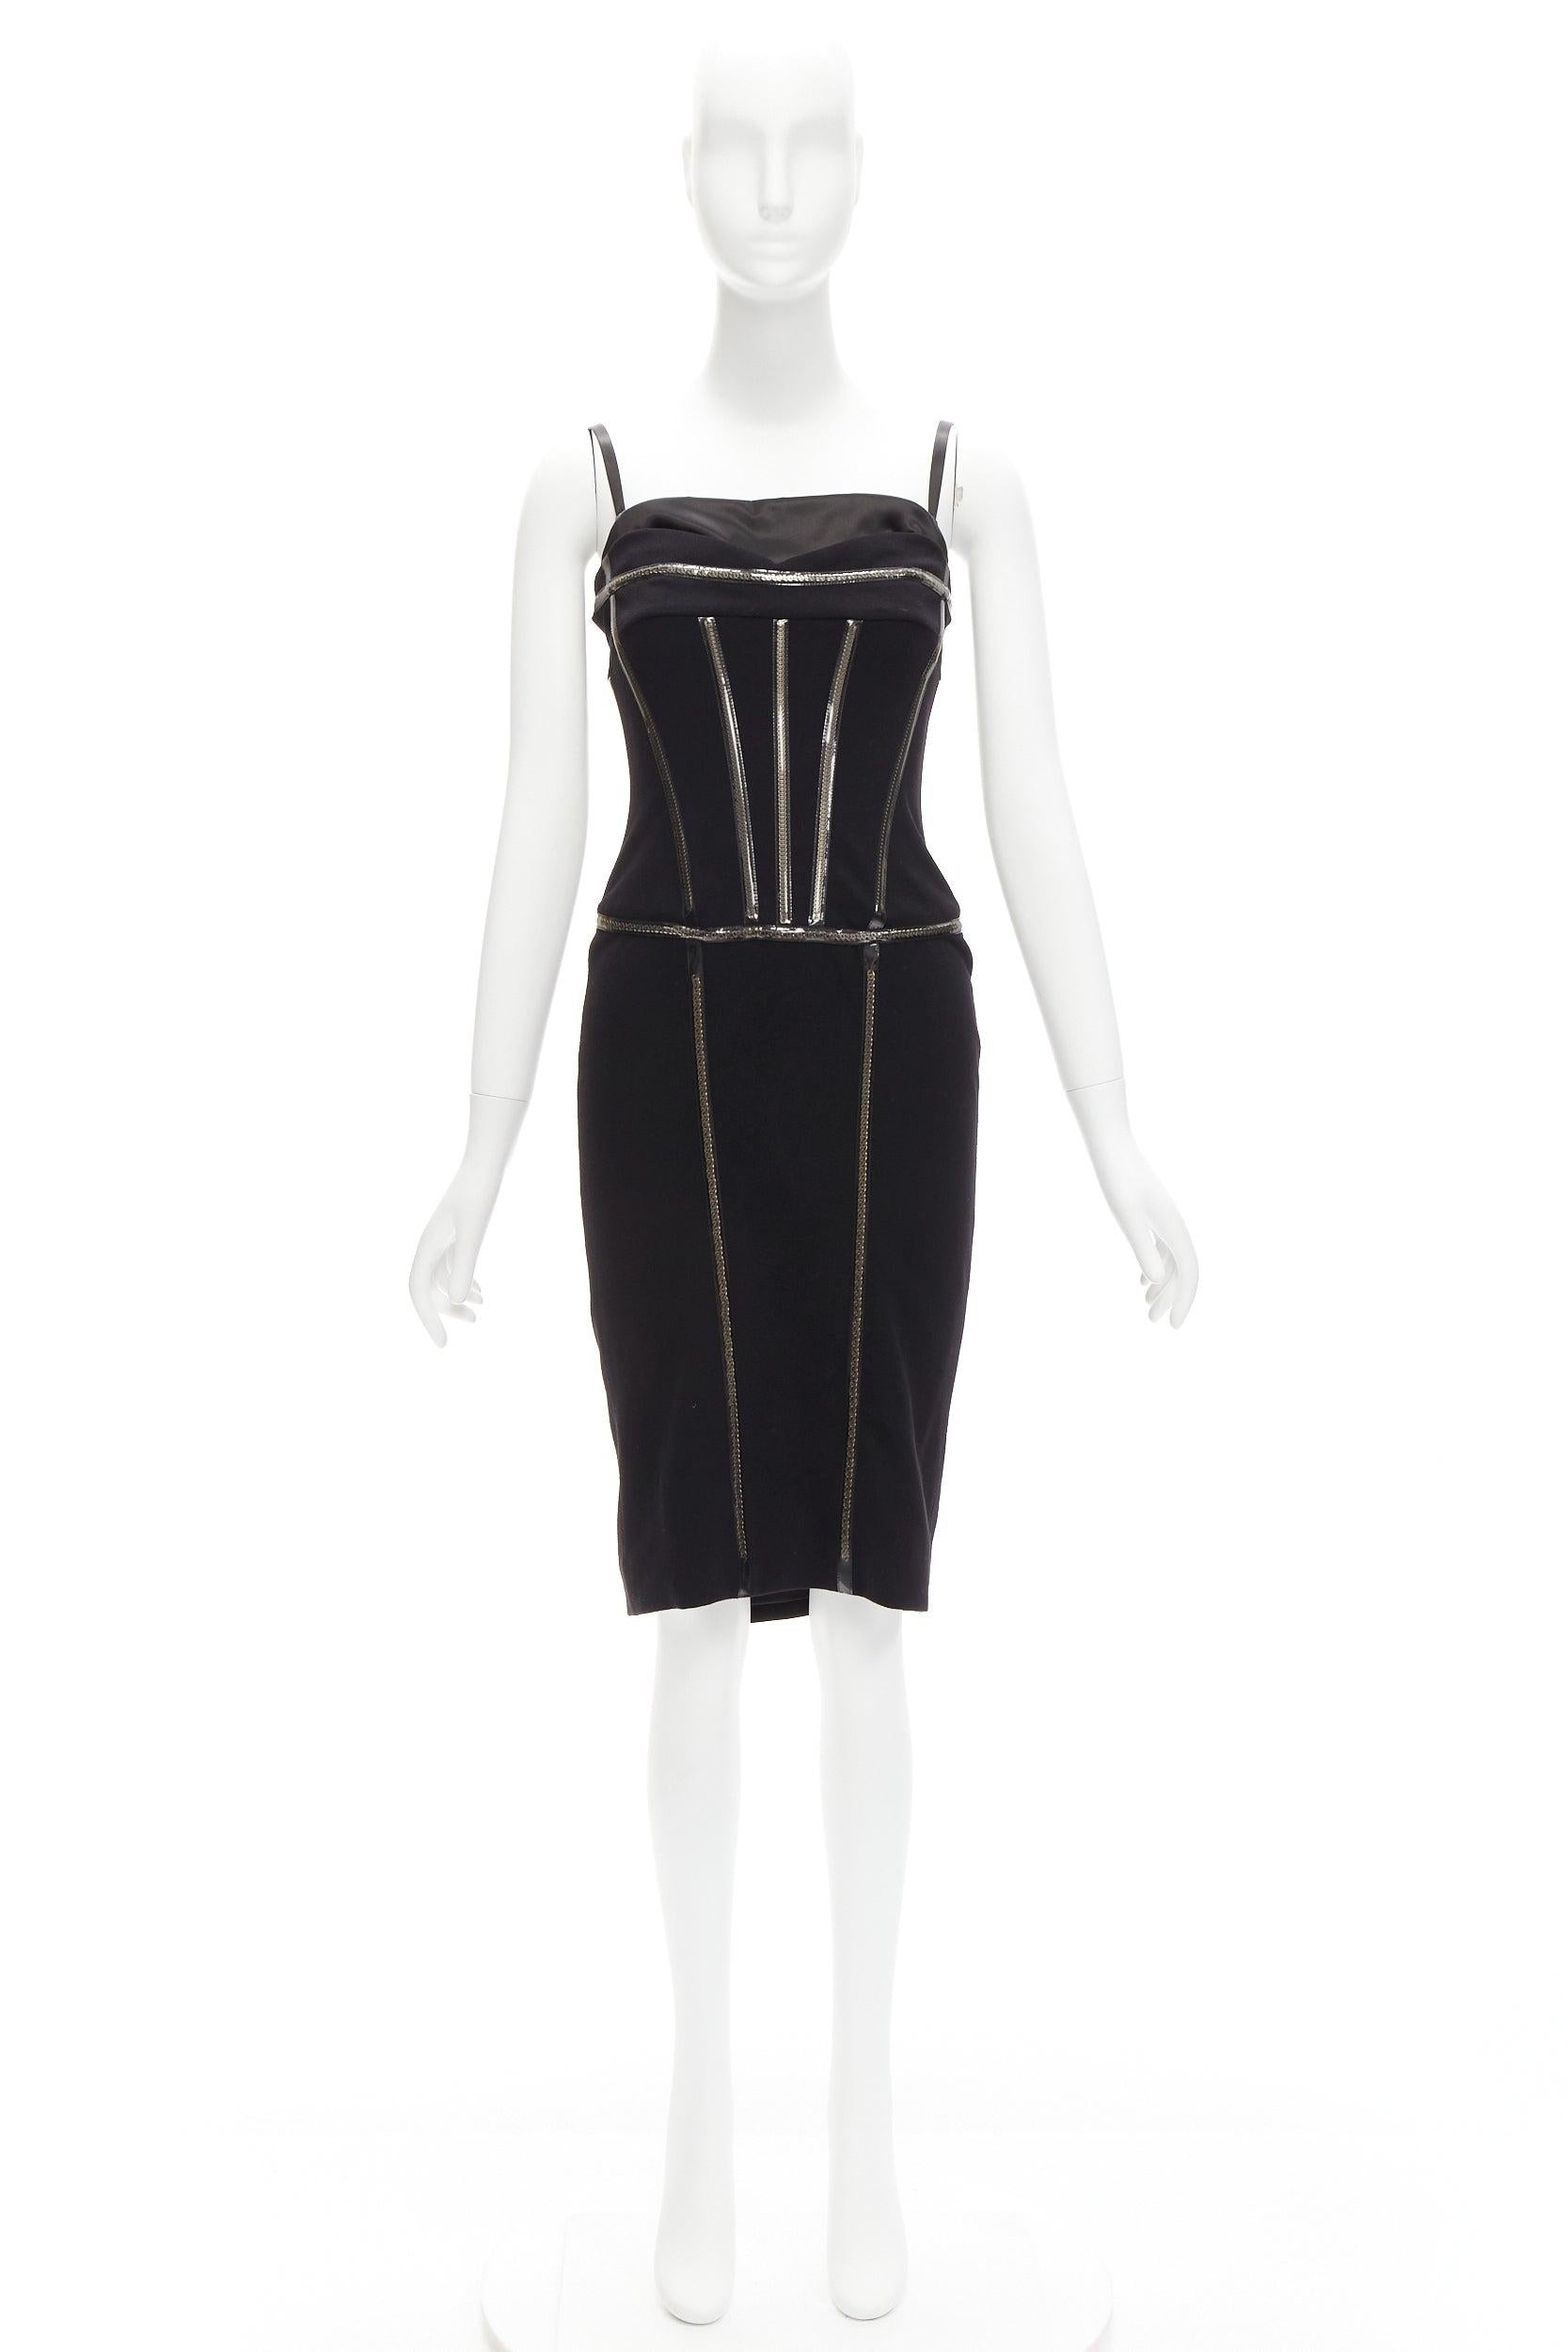 DOLCE GABBANA black plastic chain boned corset dress IT38 XS Rihanna For Sale 4